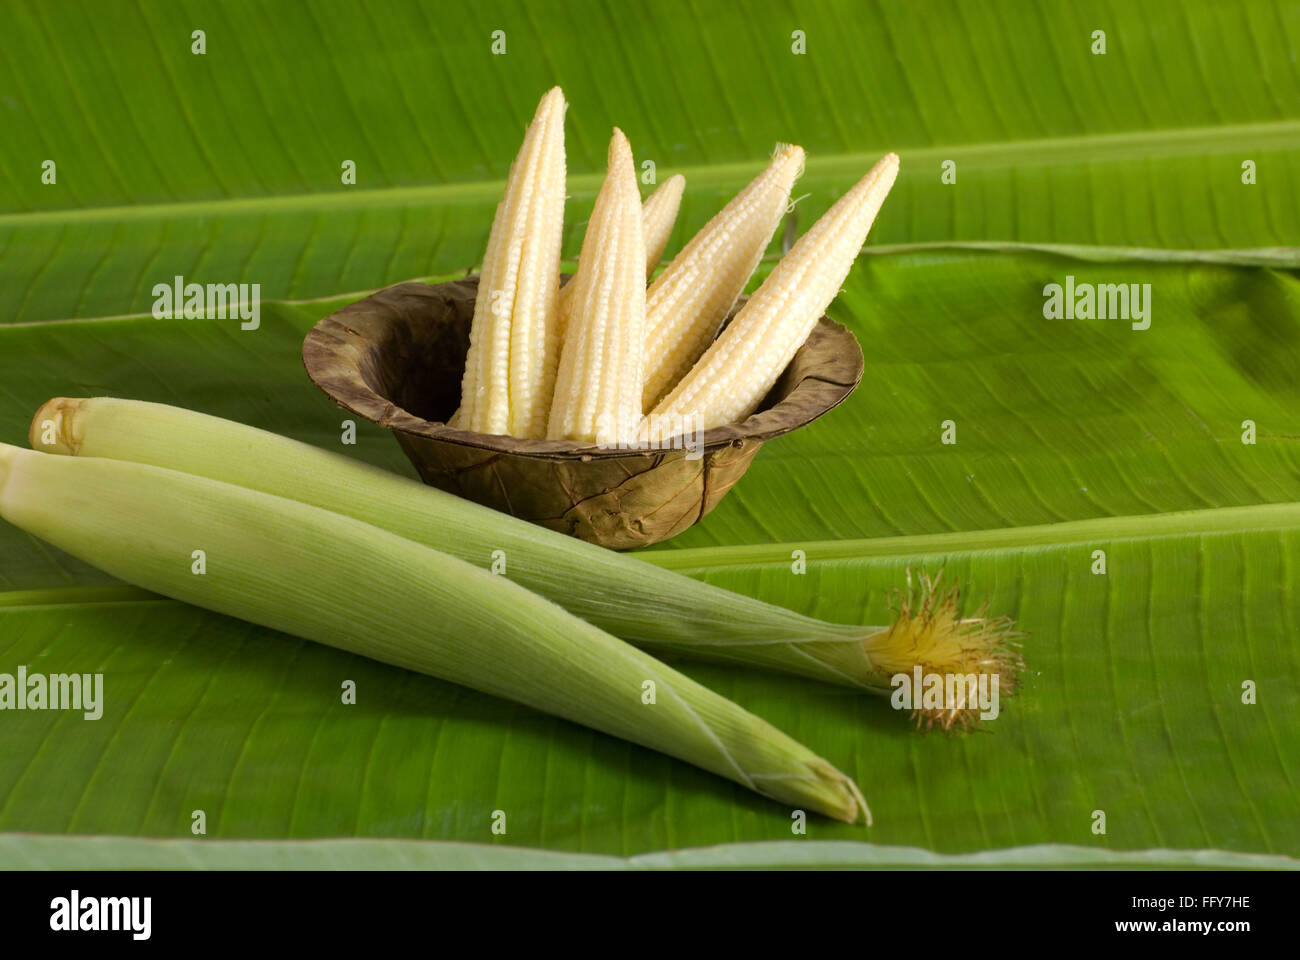 Food , Baby corns in husks on banana leaf Stock Photo